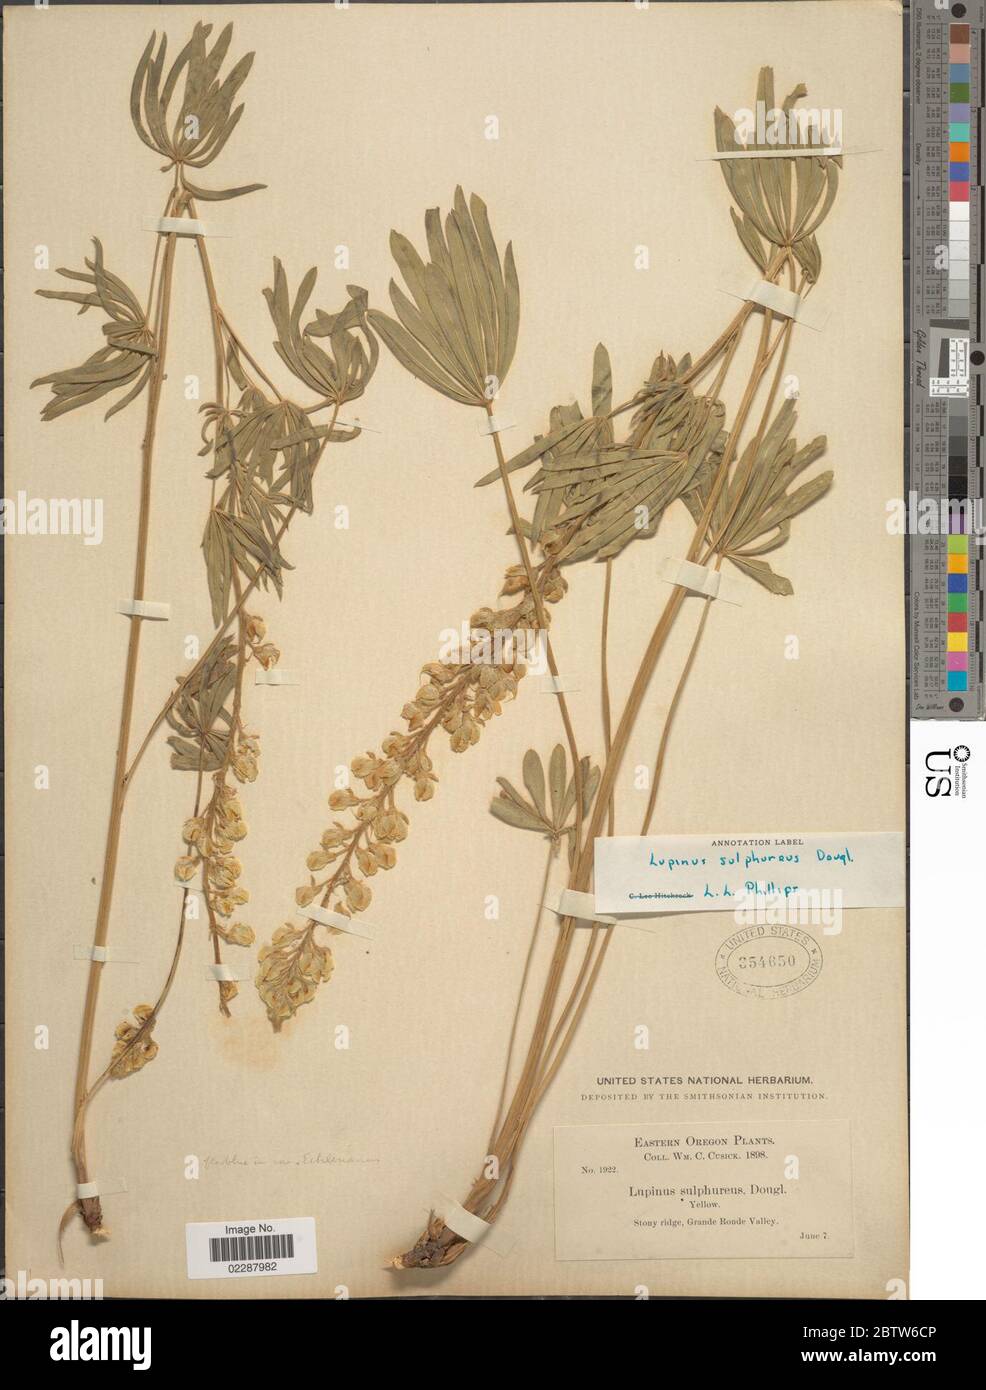 Lupinus sulphureus. Stock Photo